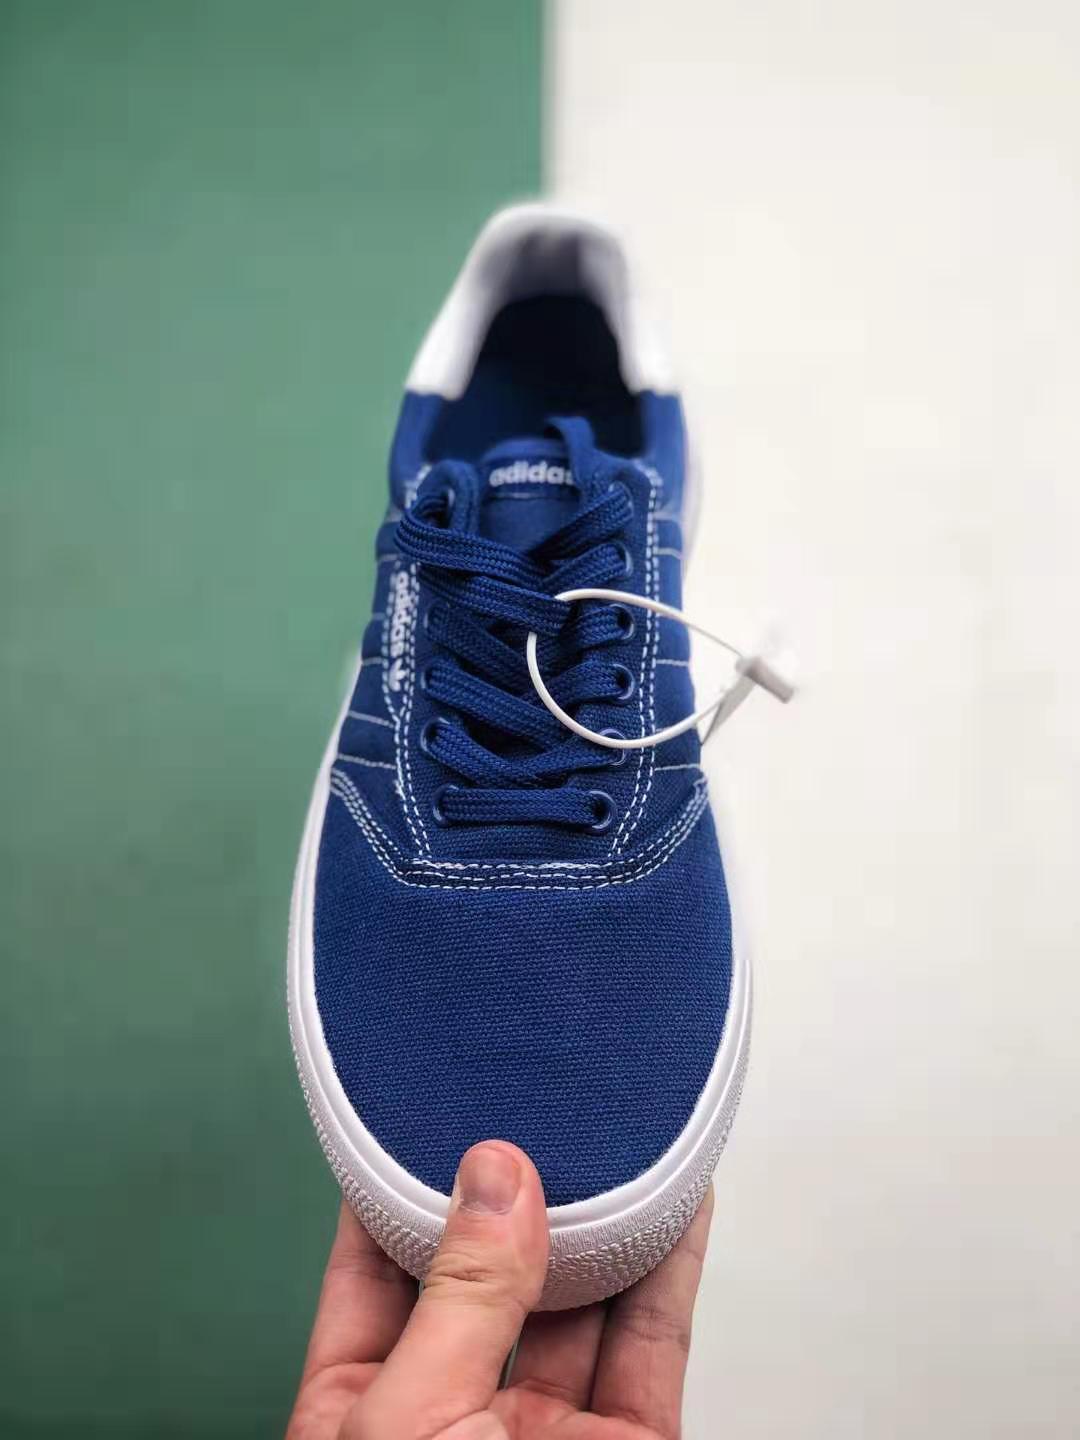 Adidas Originals 3MC Vulc Shoes Blue G28192 - Stylish & comfortable sneakers